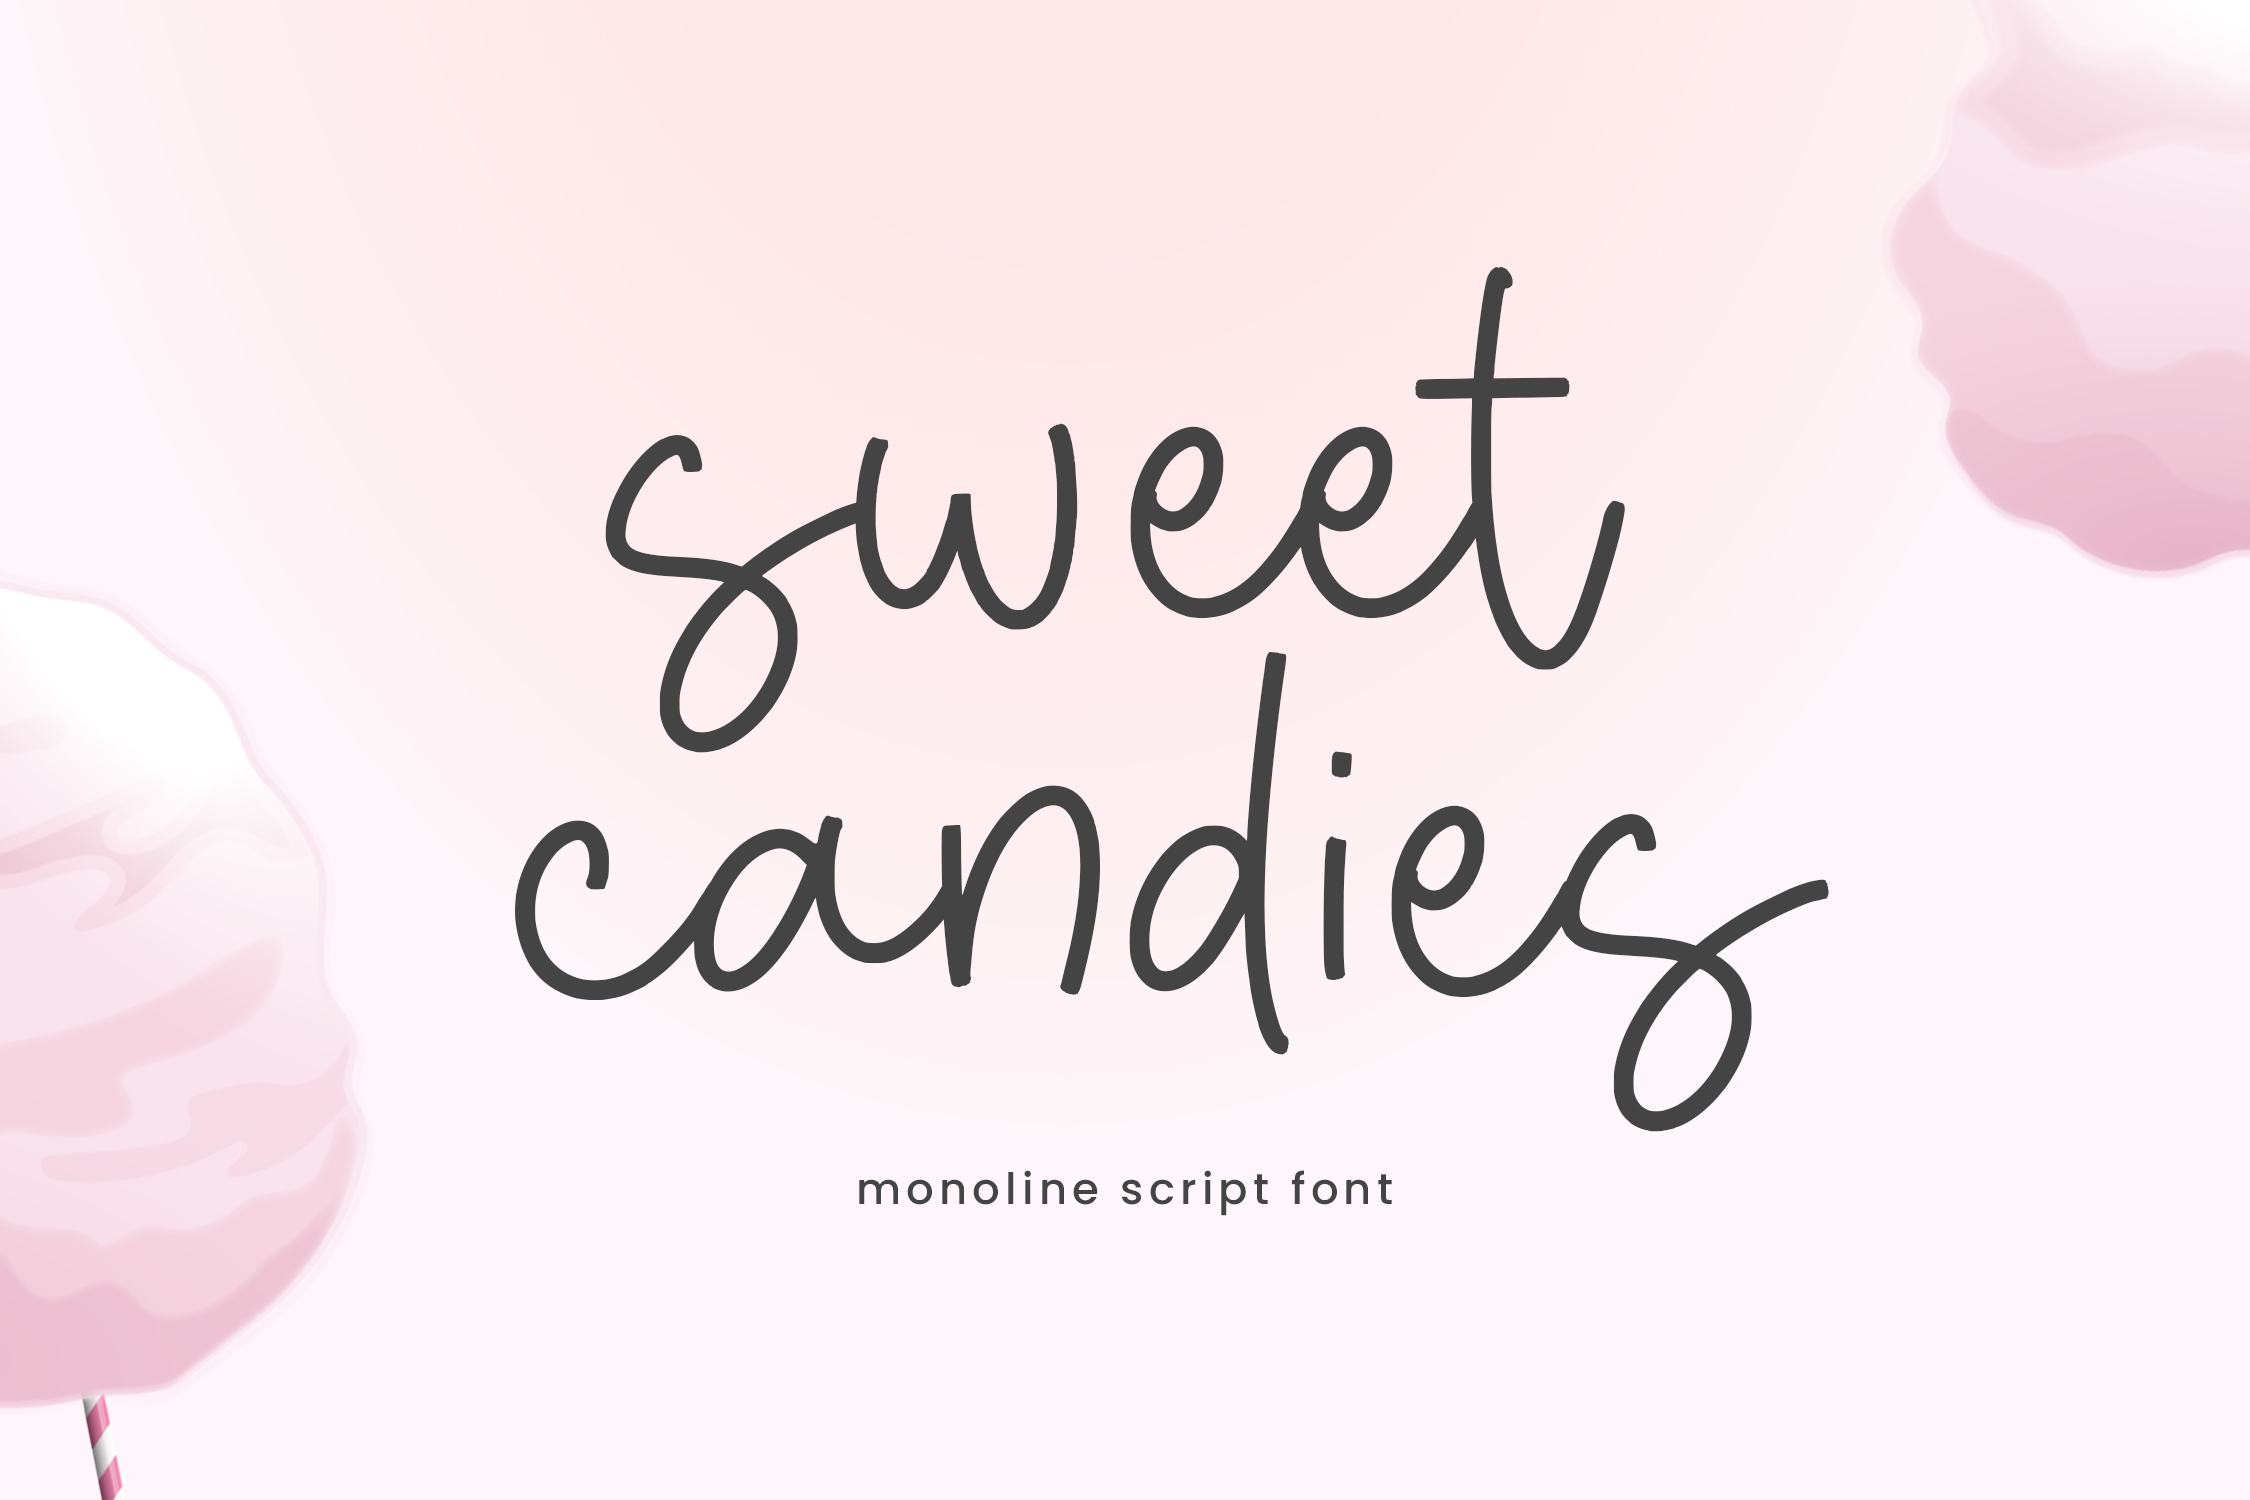 Sweet Candies